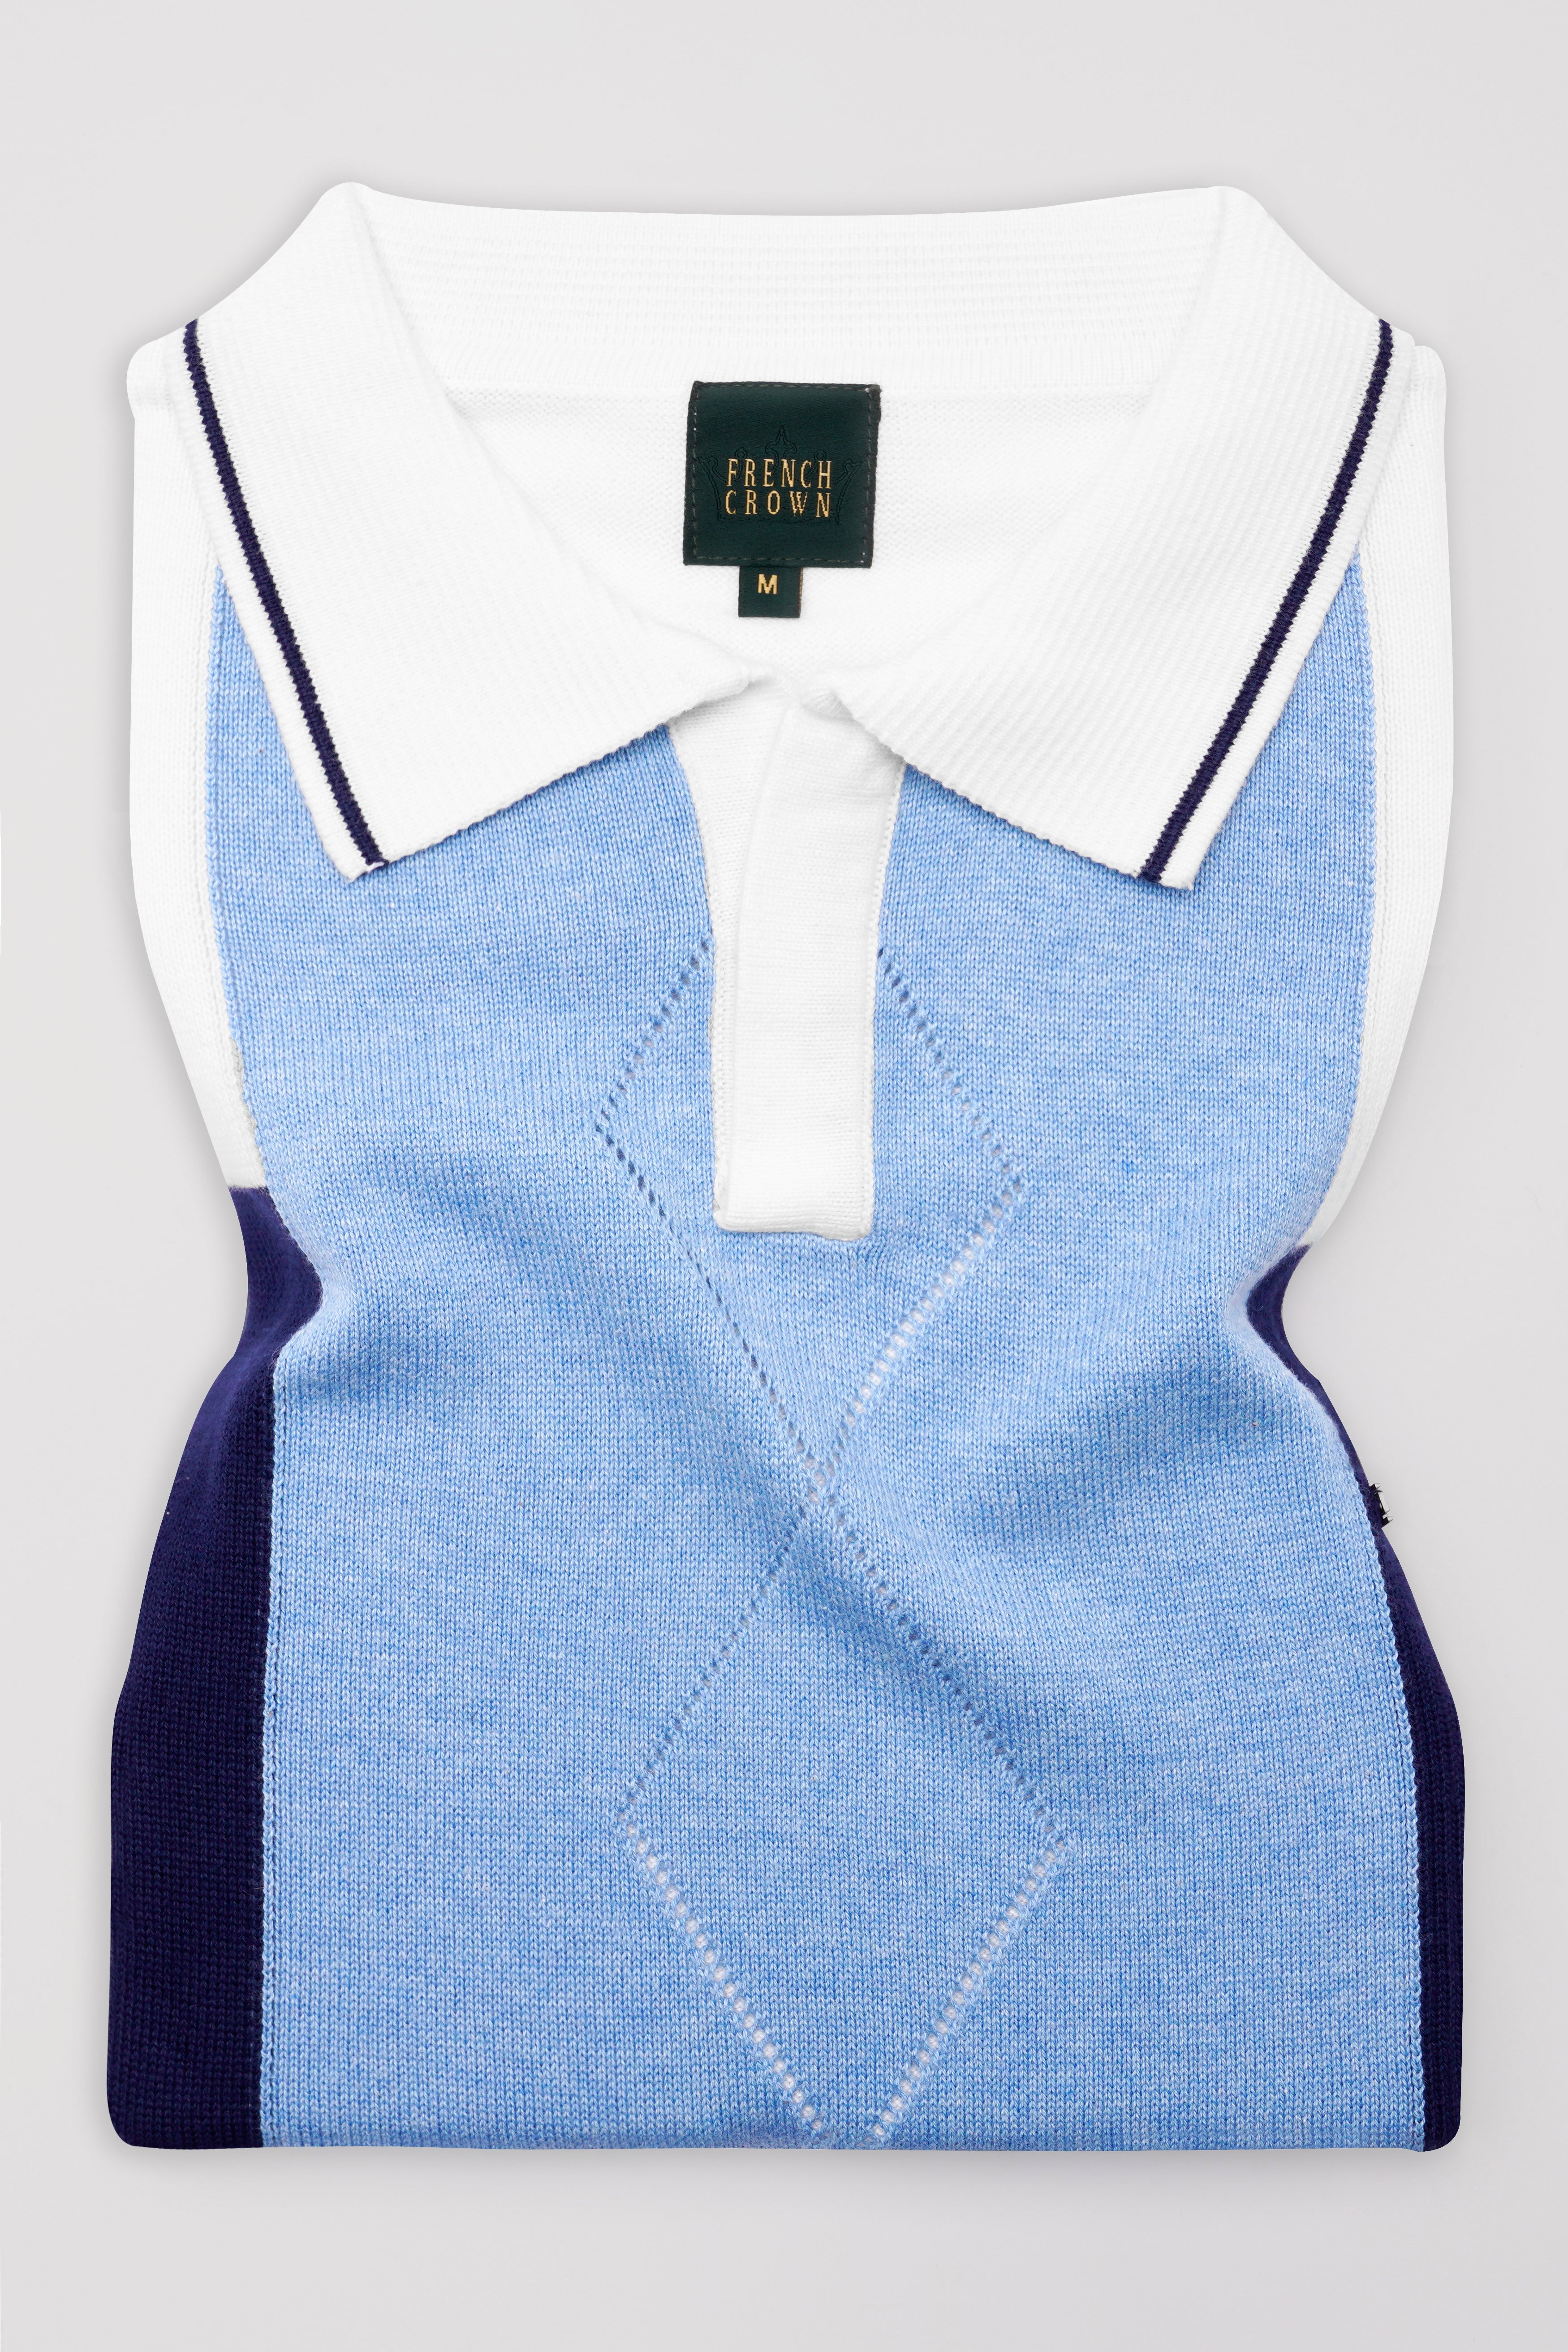 Perano Blue with Haiti Blue and White Premium Cotton Flat Knit Polo TS928-S, TS928-M, TS928-L, TS928-XL, TS928-XXL